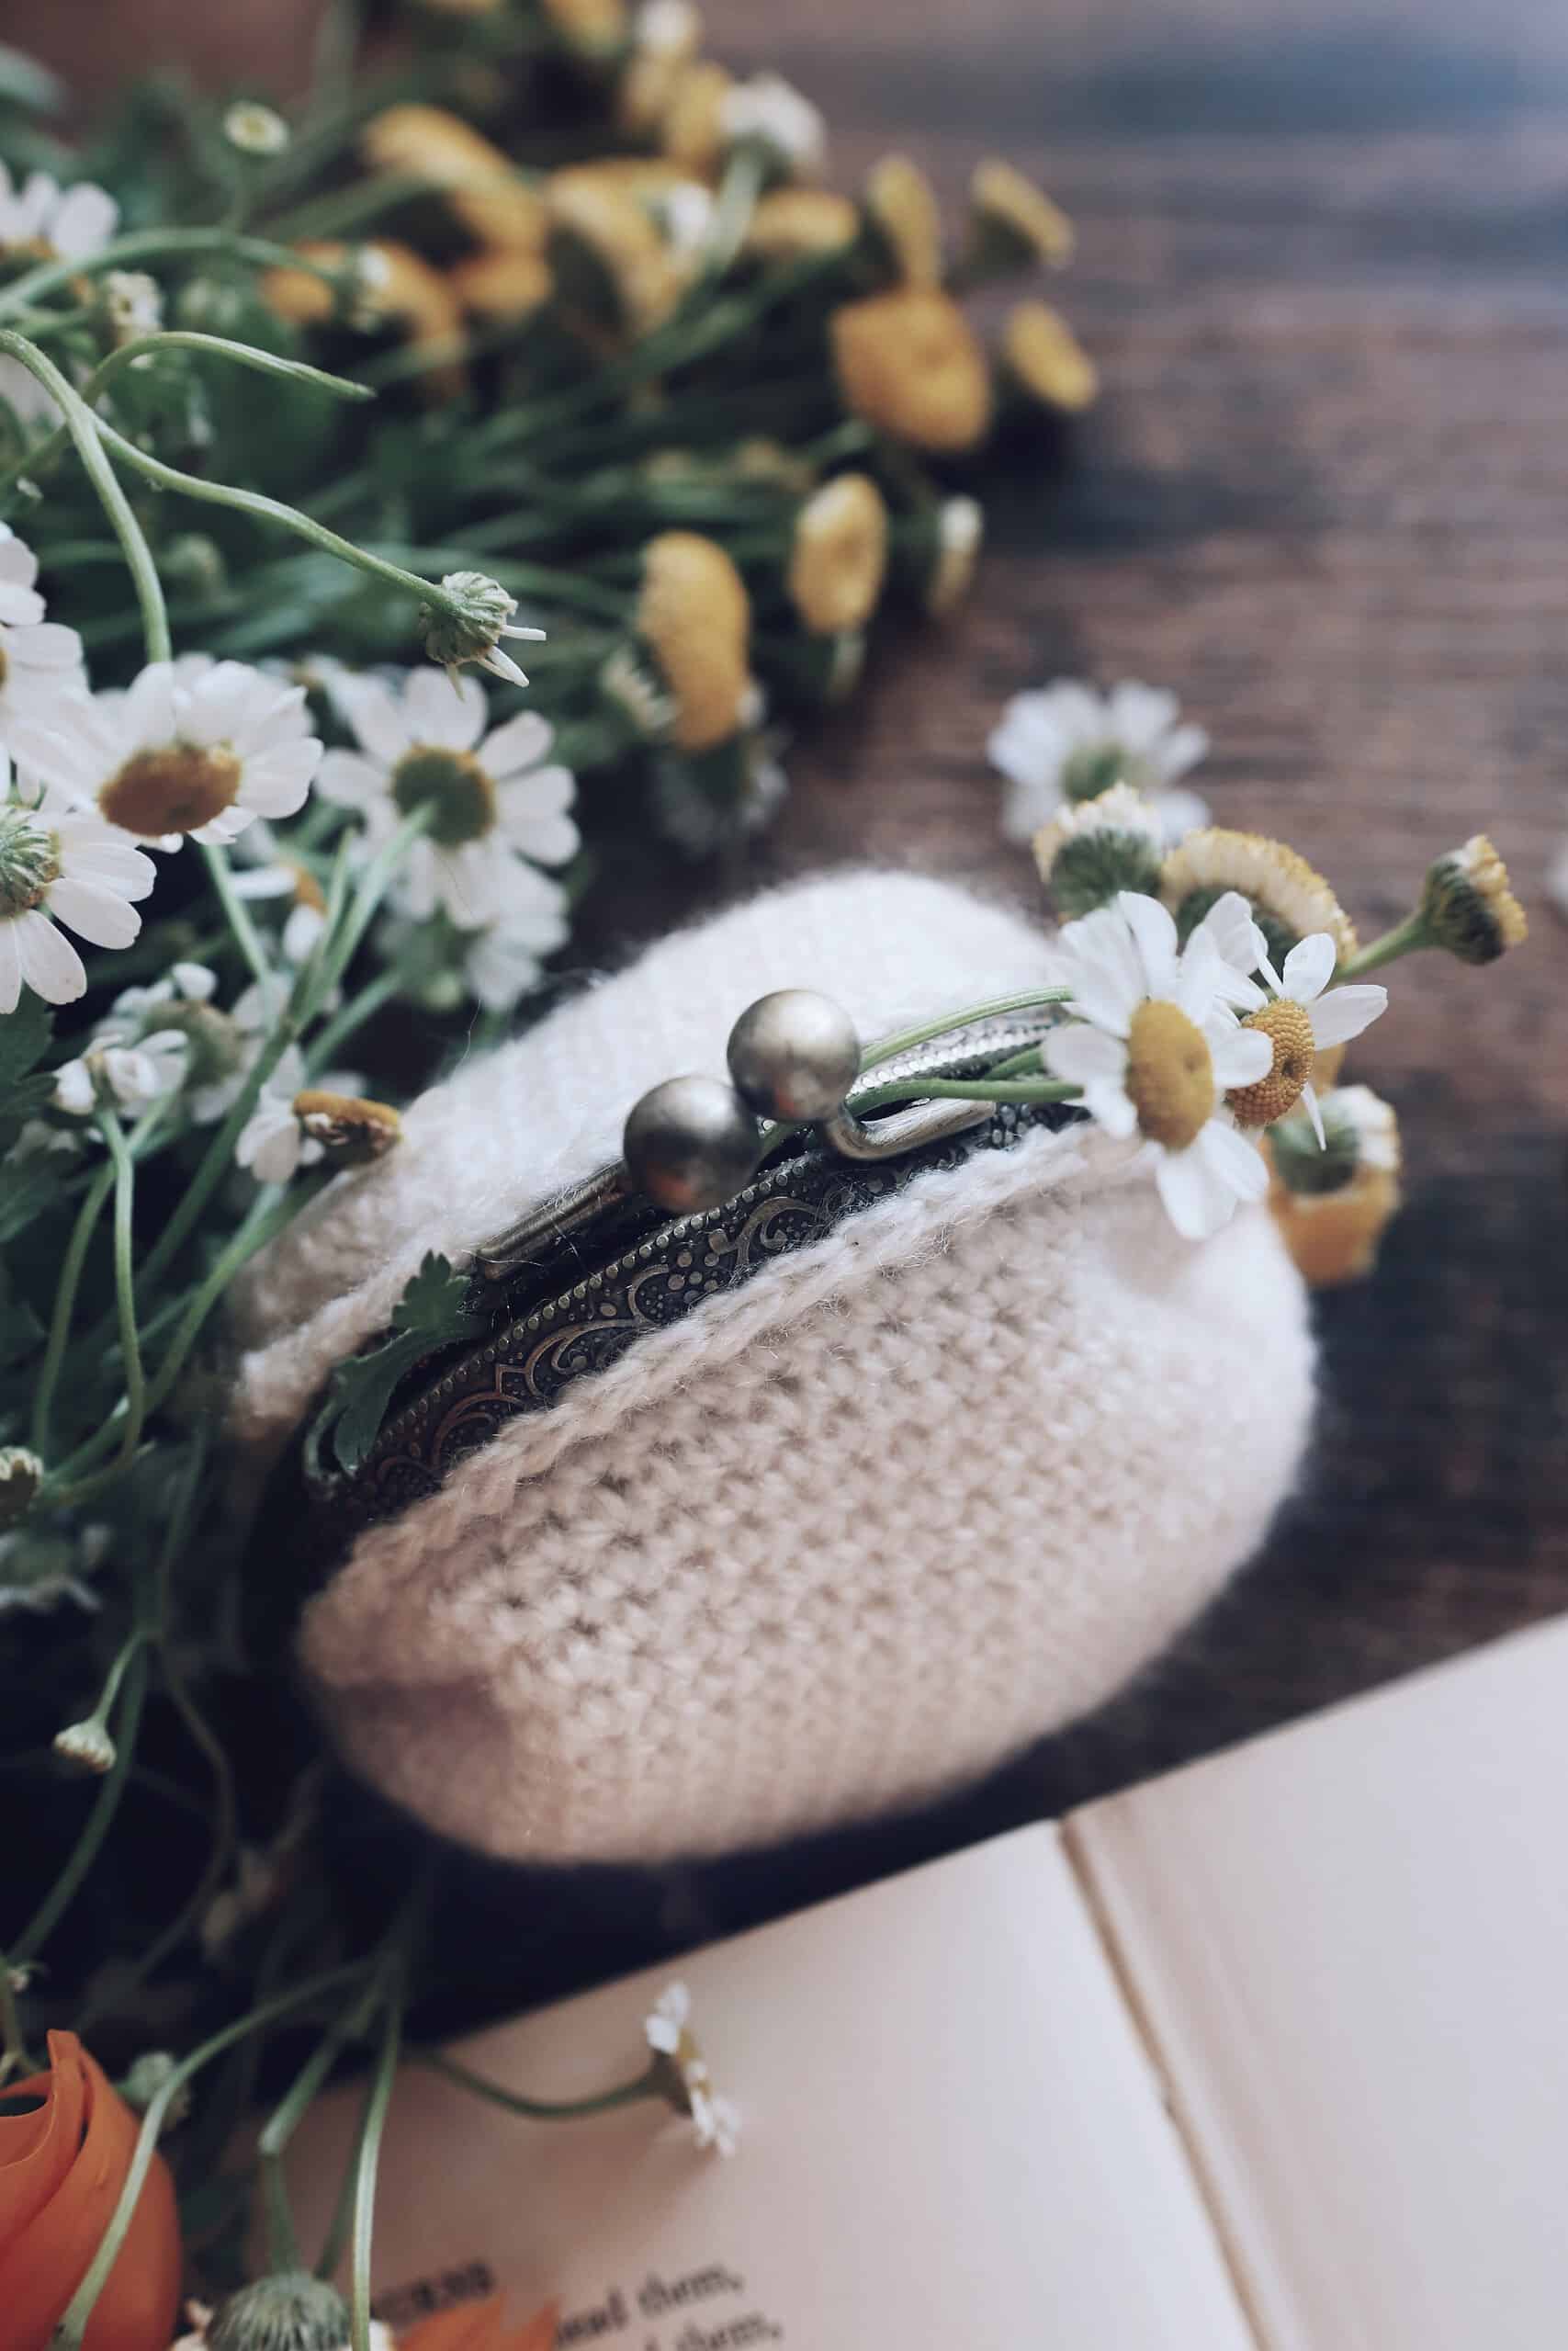 Amazon.com: CerfoParlen Small Crossbody Bags for Women Crochet Purse with  Flower Knitting Bag Cute Boho Bag (Beige) : Handmade Products